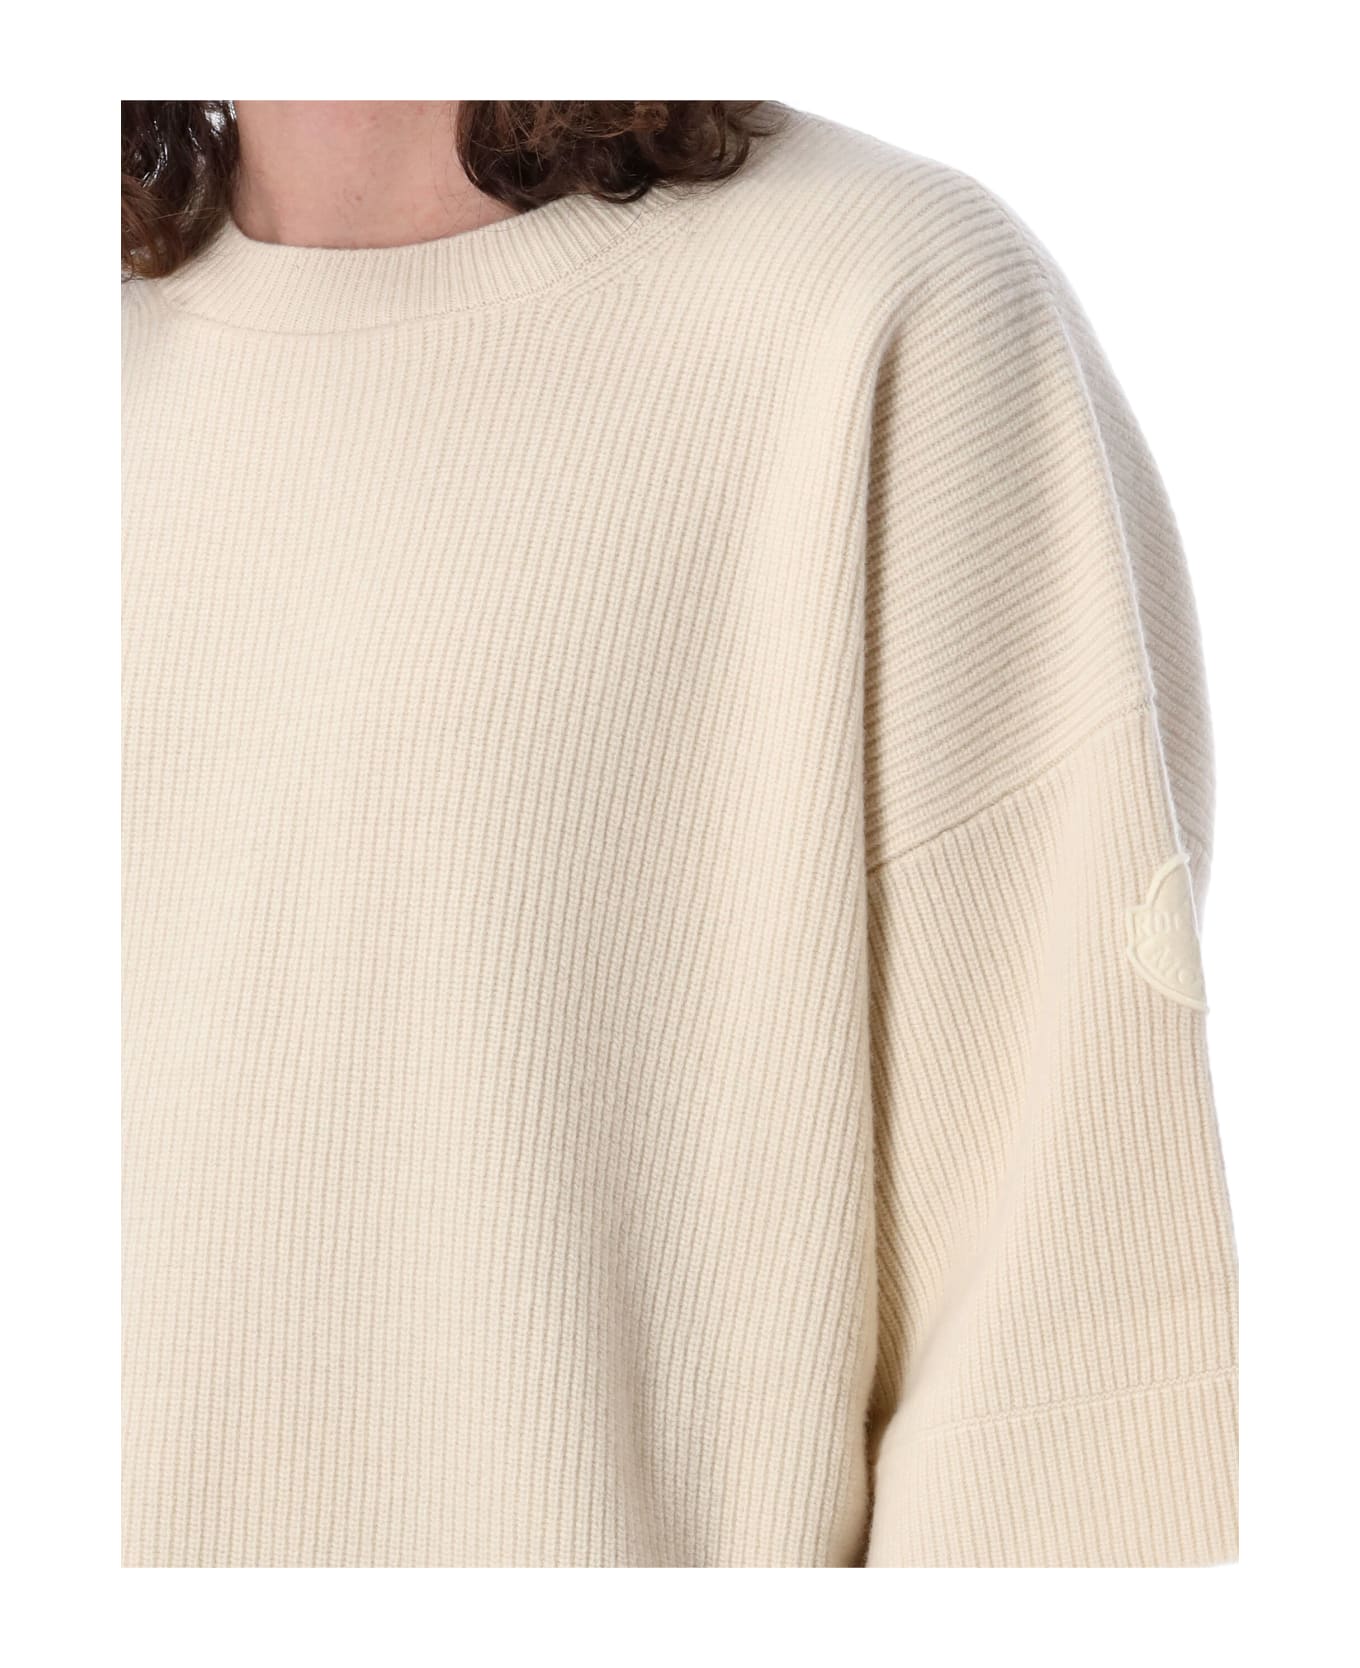 Moncler Genius Short Sleeves Sweater - NATURAL